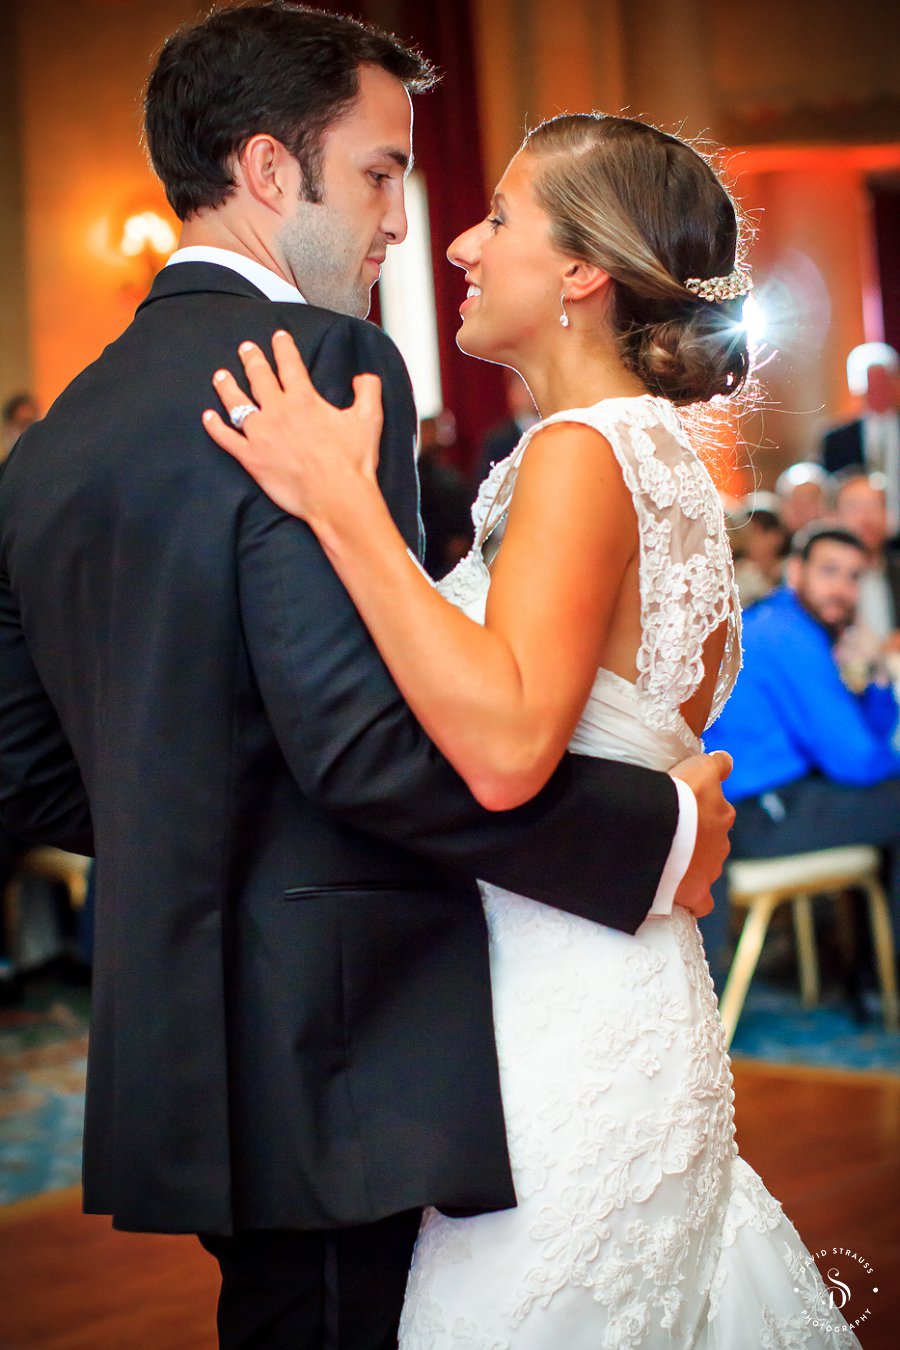 Atlanta Wedding Photography - Charleston Photographer David Strauss - Claire and Kyle - 33